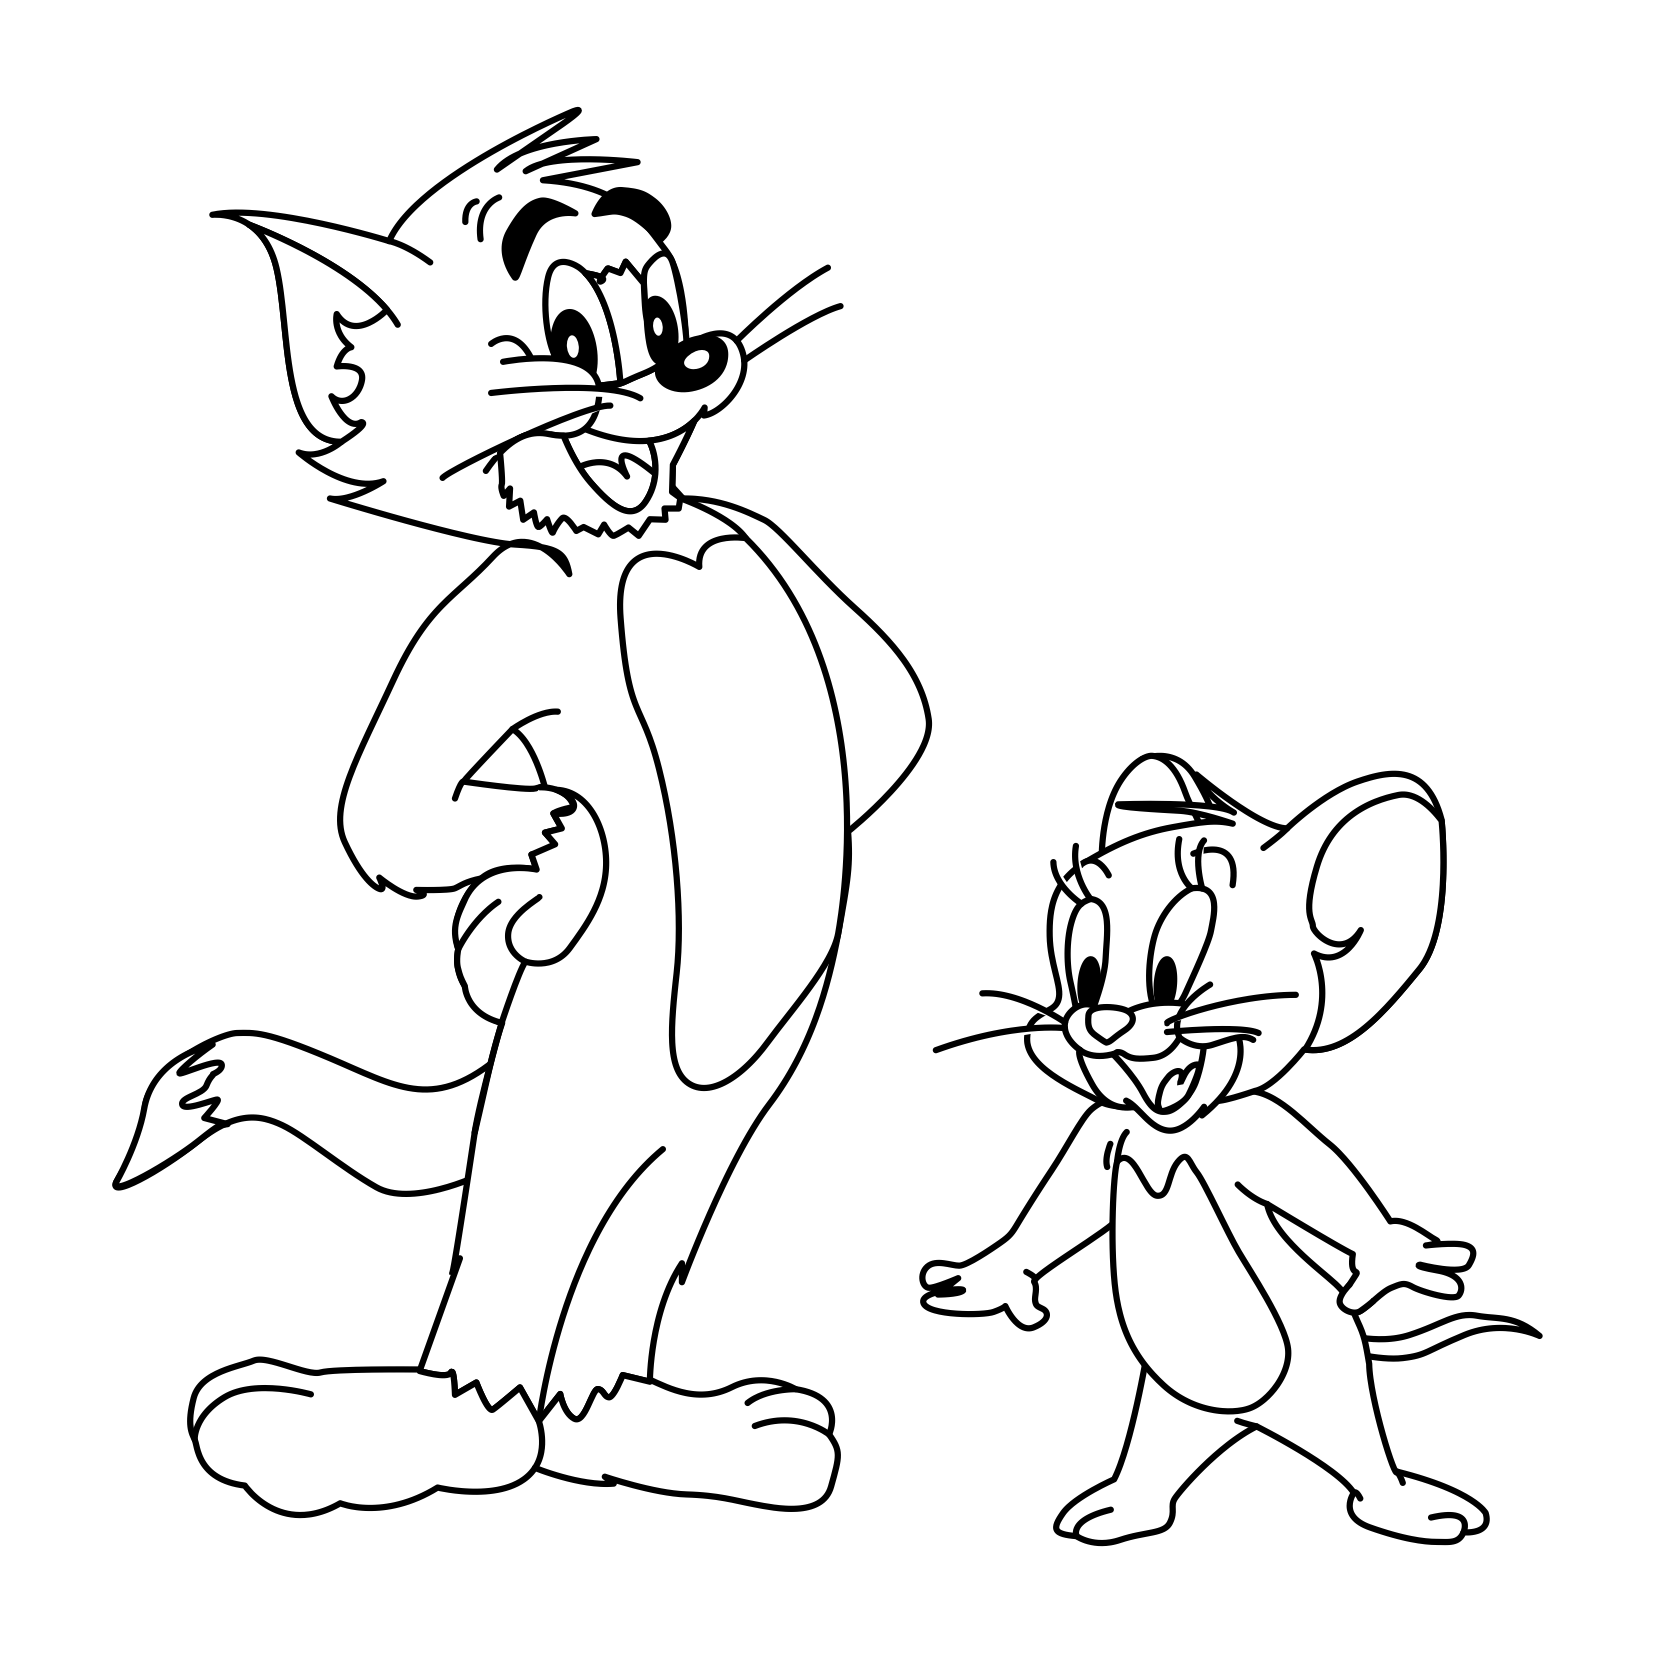 Free Tom And Jerry  For Kidsbc7e